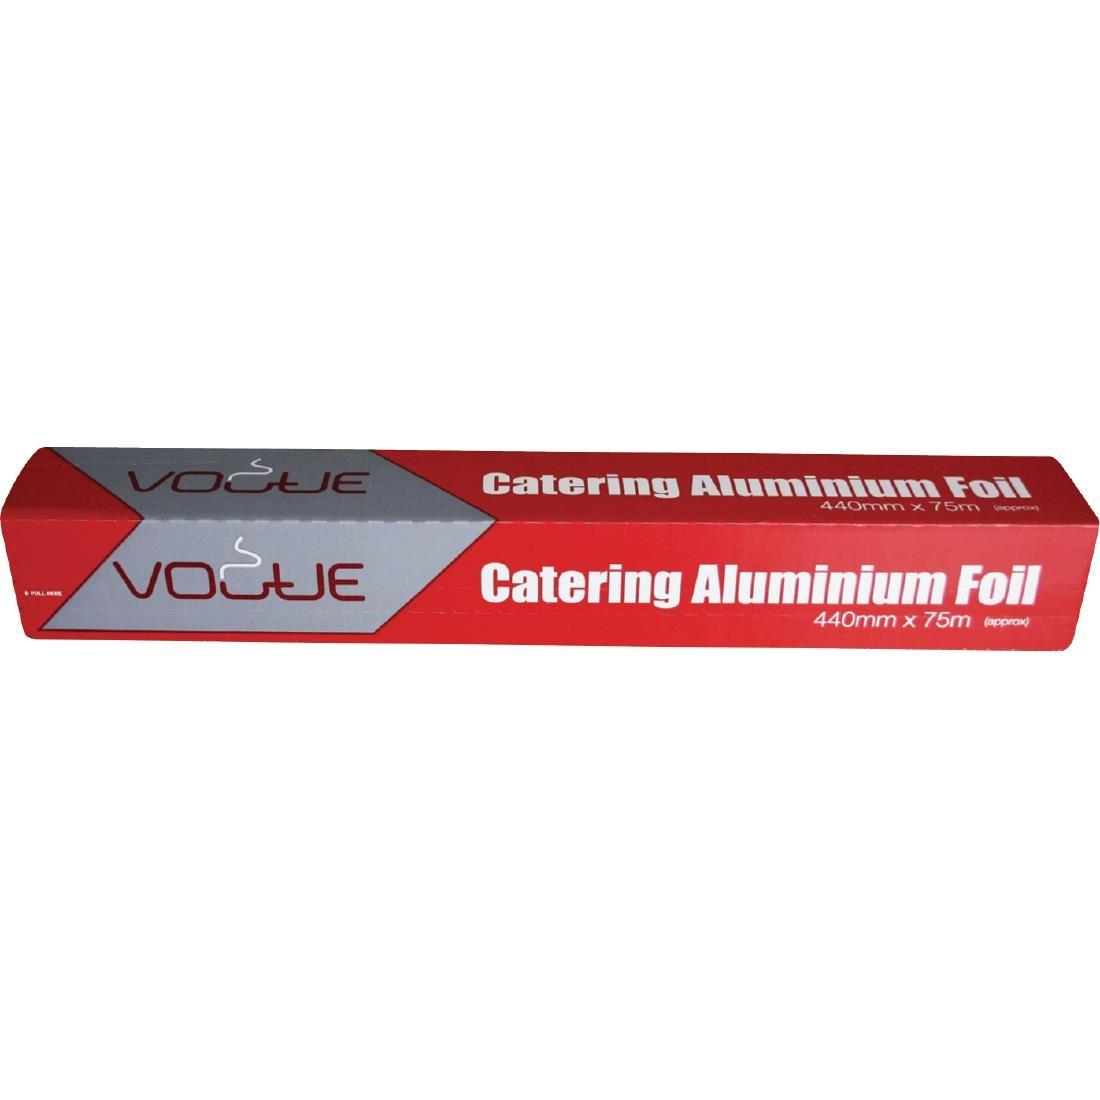 Vogue Aluminium Foil 440mm x 75m - CF353  - 2